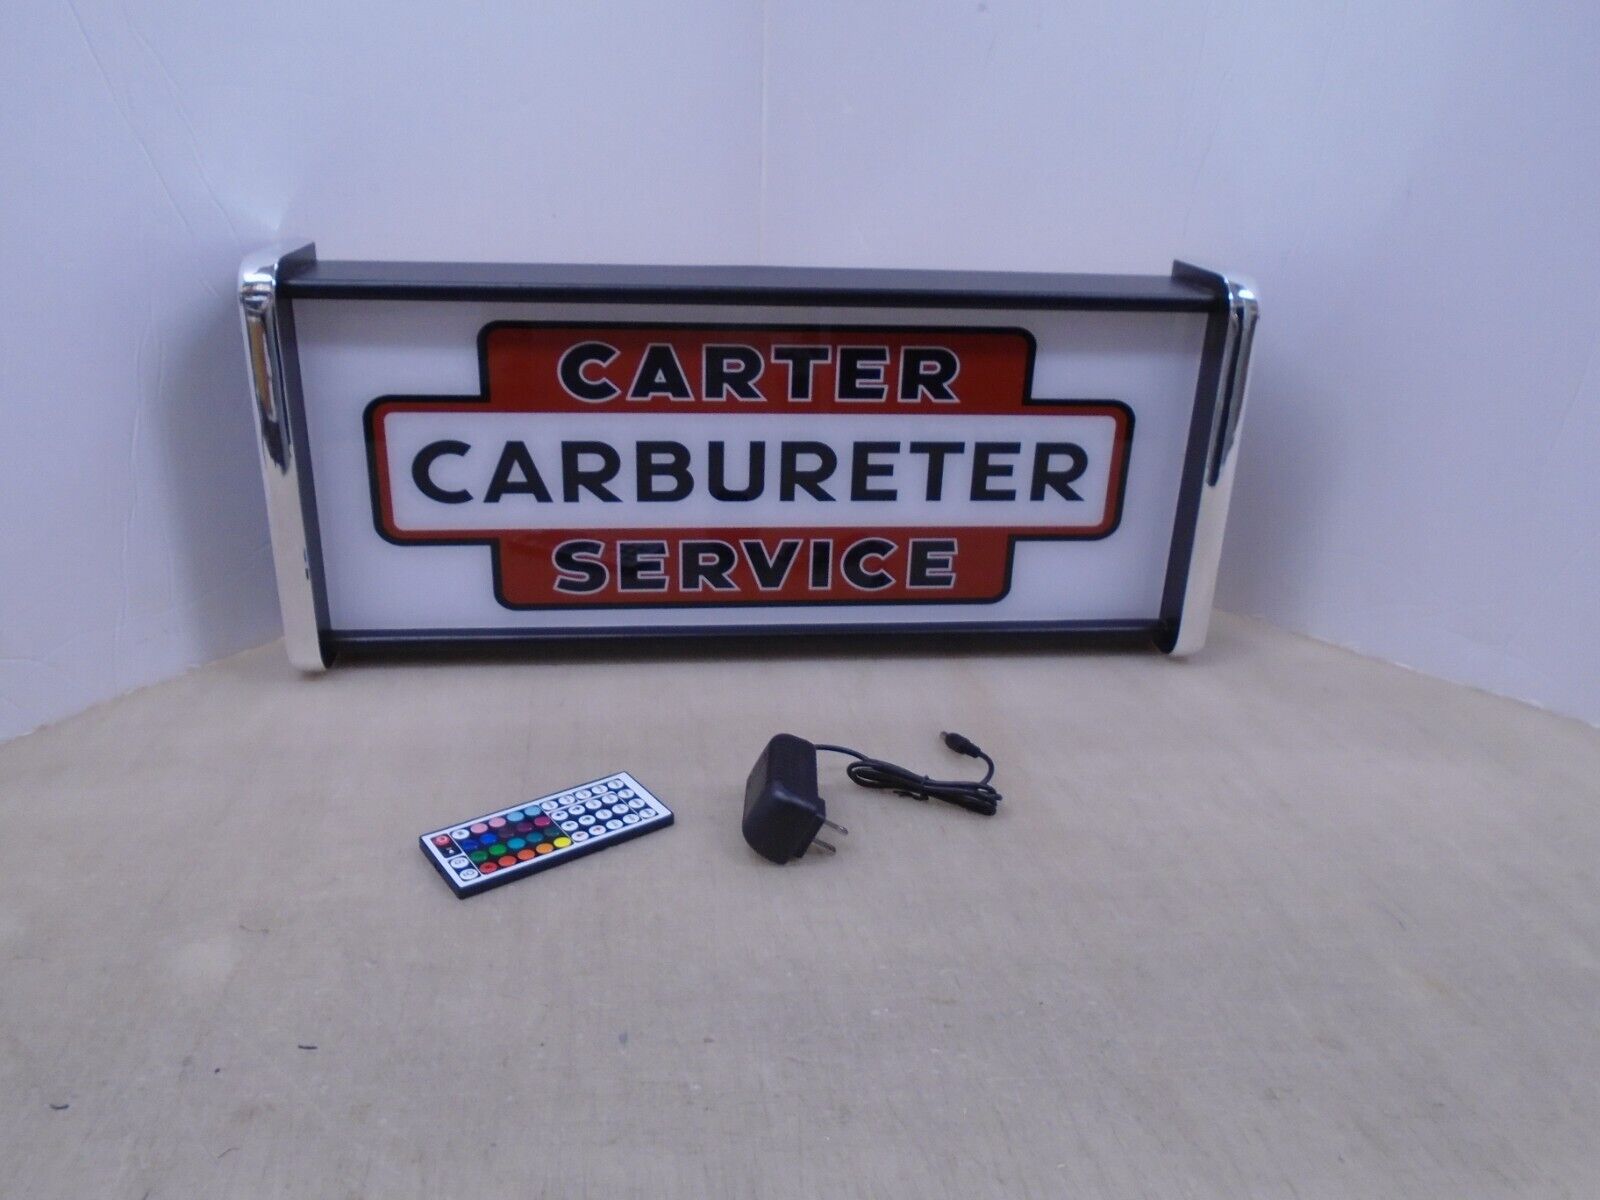 Carter Carbureter Service LED Display light sign box